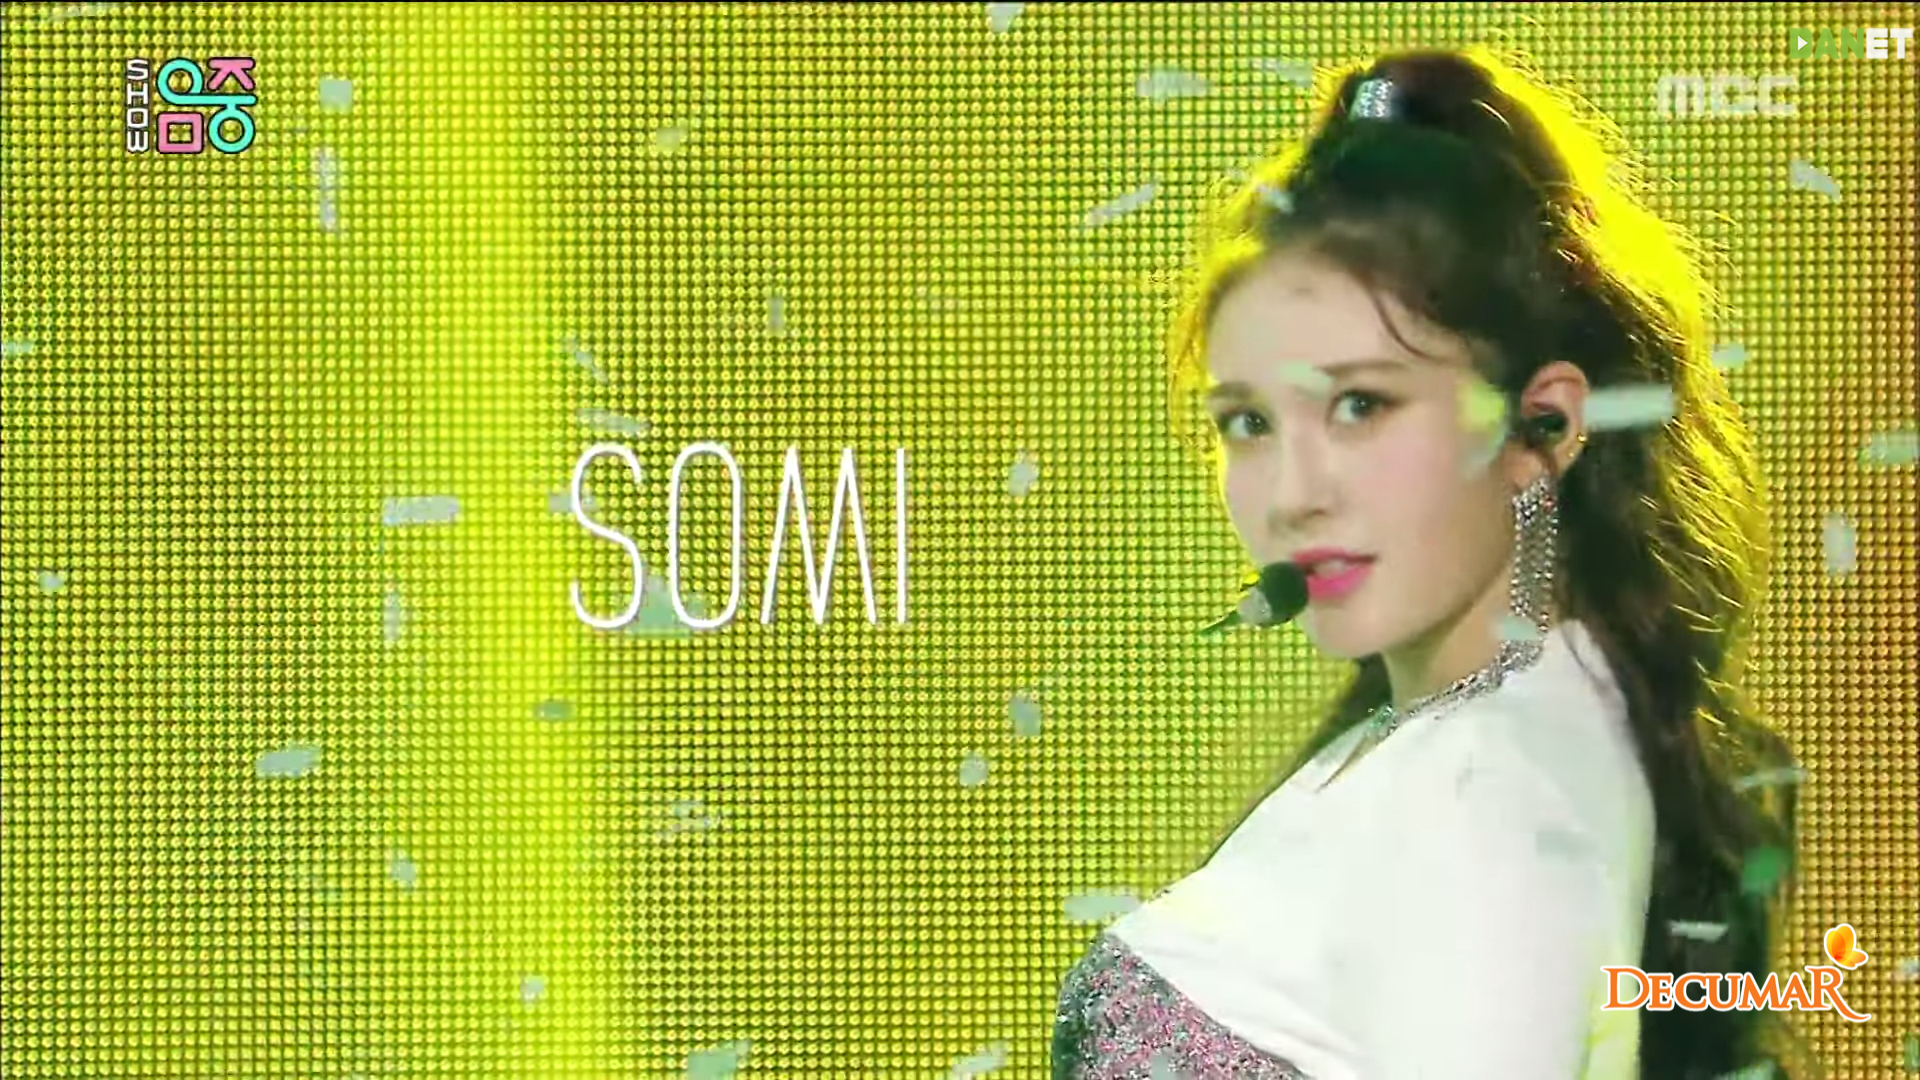 [Debut Stage] SOMI - BIRTHDAY, 전소미 - BIRTHDAY Show Music core 20190615 3-3 screenshot